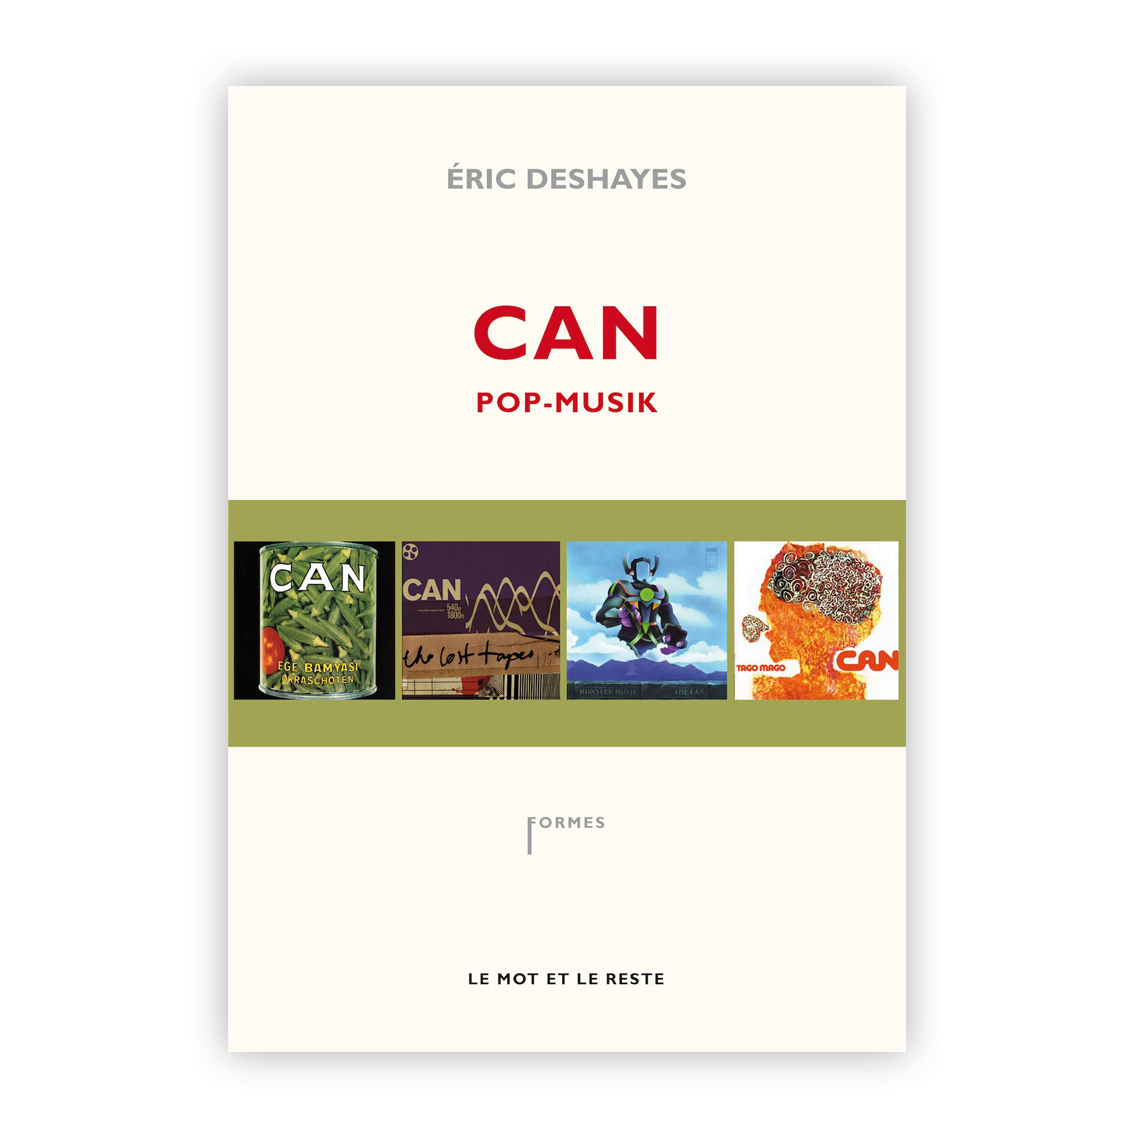 Can, pop-musik Livre broché – 19 septembre 2013